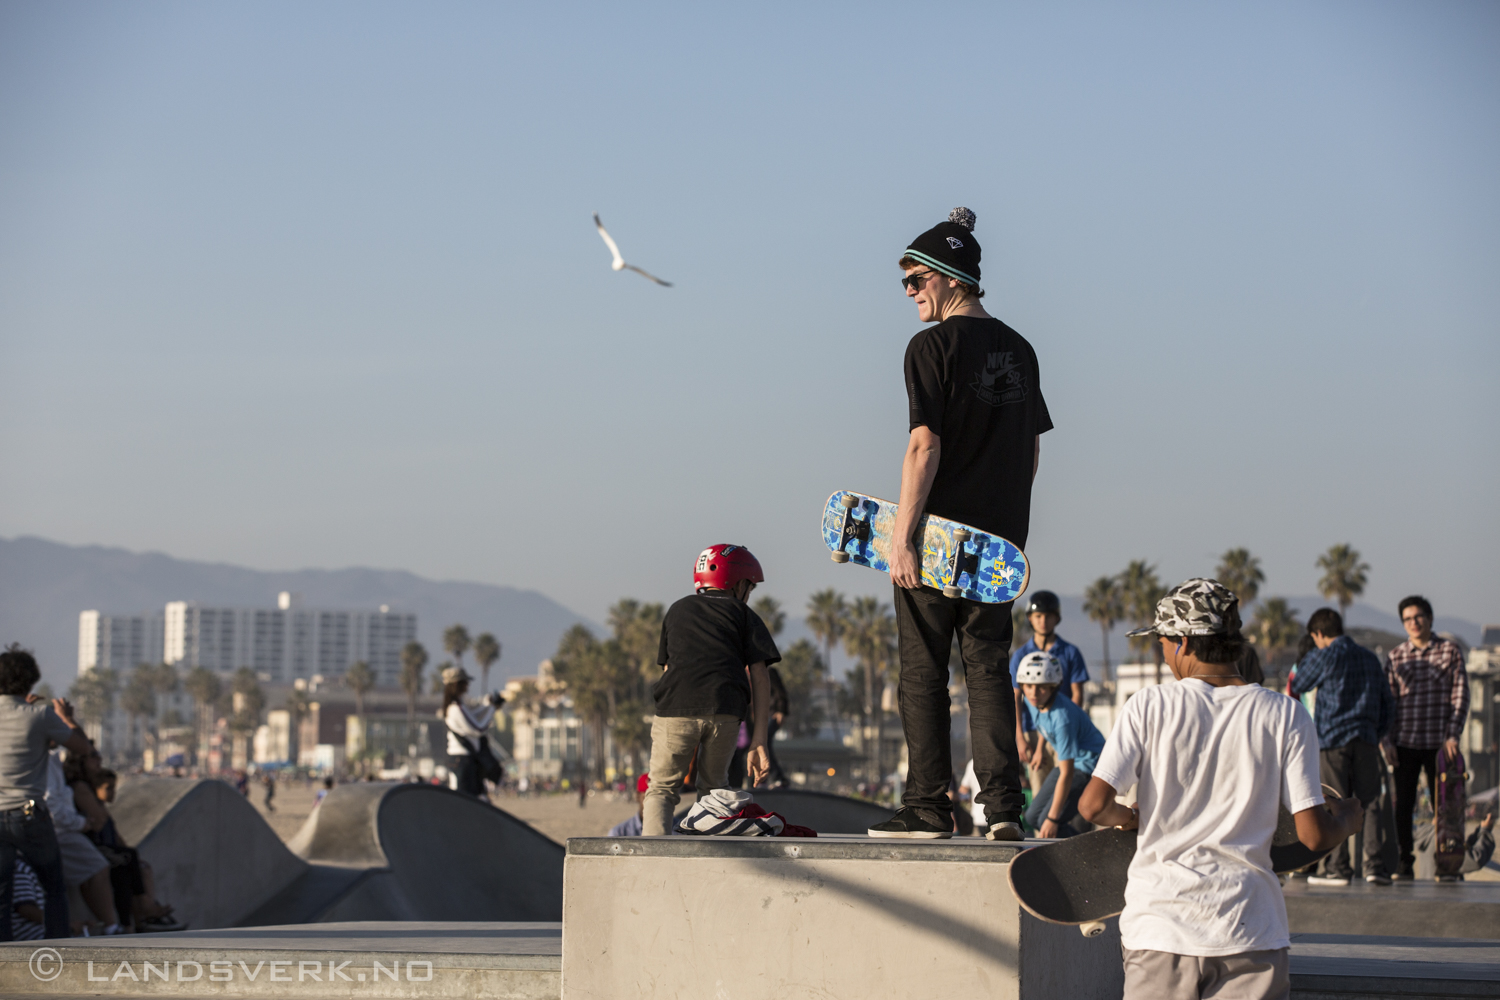 Venice Beach, Los Angeles, California.

(Canon EOS 5D Mark III / Canon EF 70-200mm f/2.8 L IS II USM)